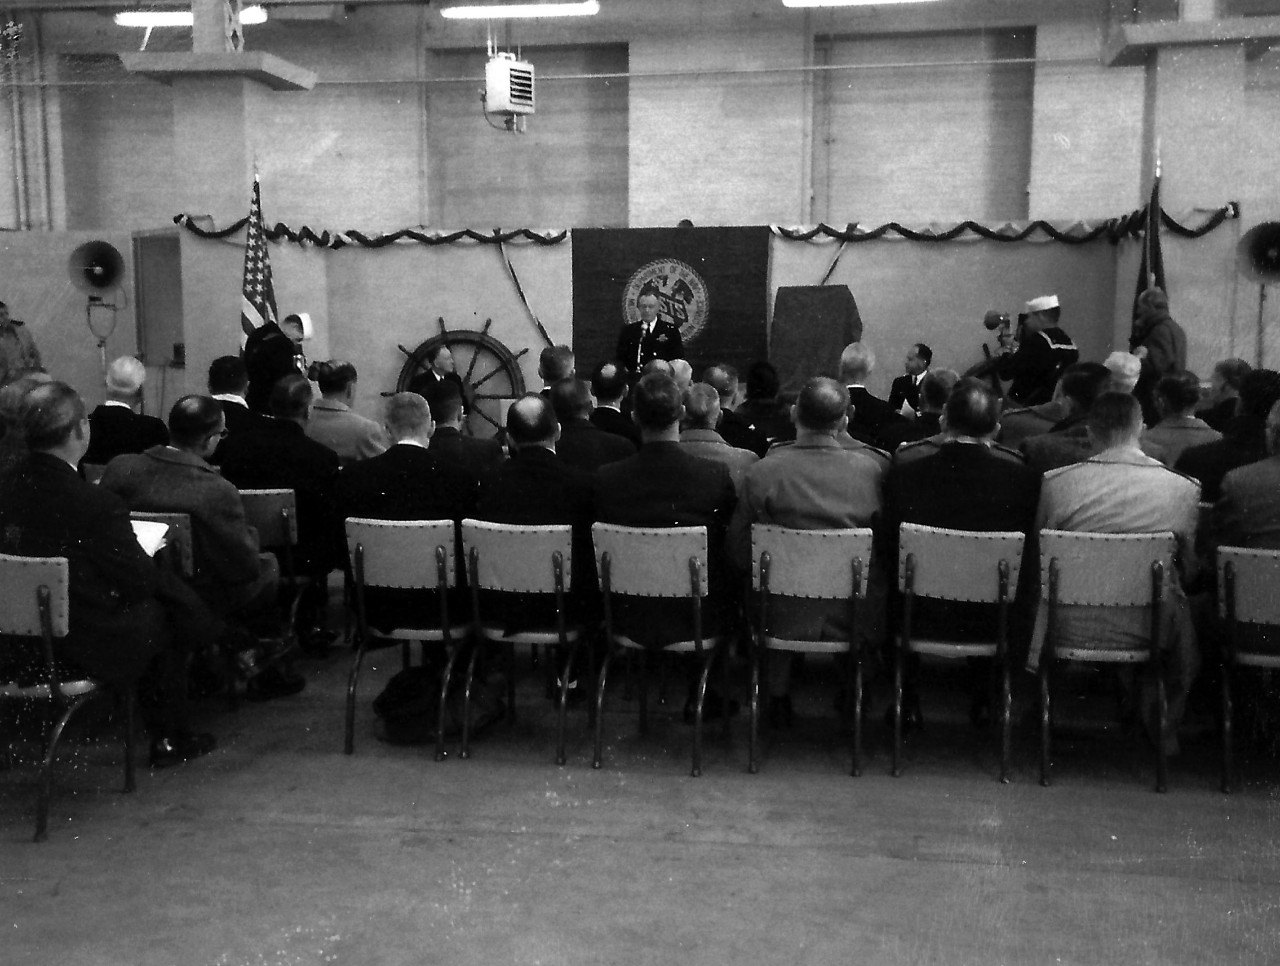 NMUSN-18: USNS James M. Gilliss presentation at Naval Historical Display Center, Washington Navy Yard, Washington, D.C. December 14, 1962. Rear Admiral Edward C. Stephan, USNR, gives remarks during the presentation at the Naval Historical Display...